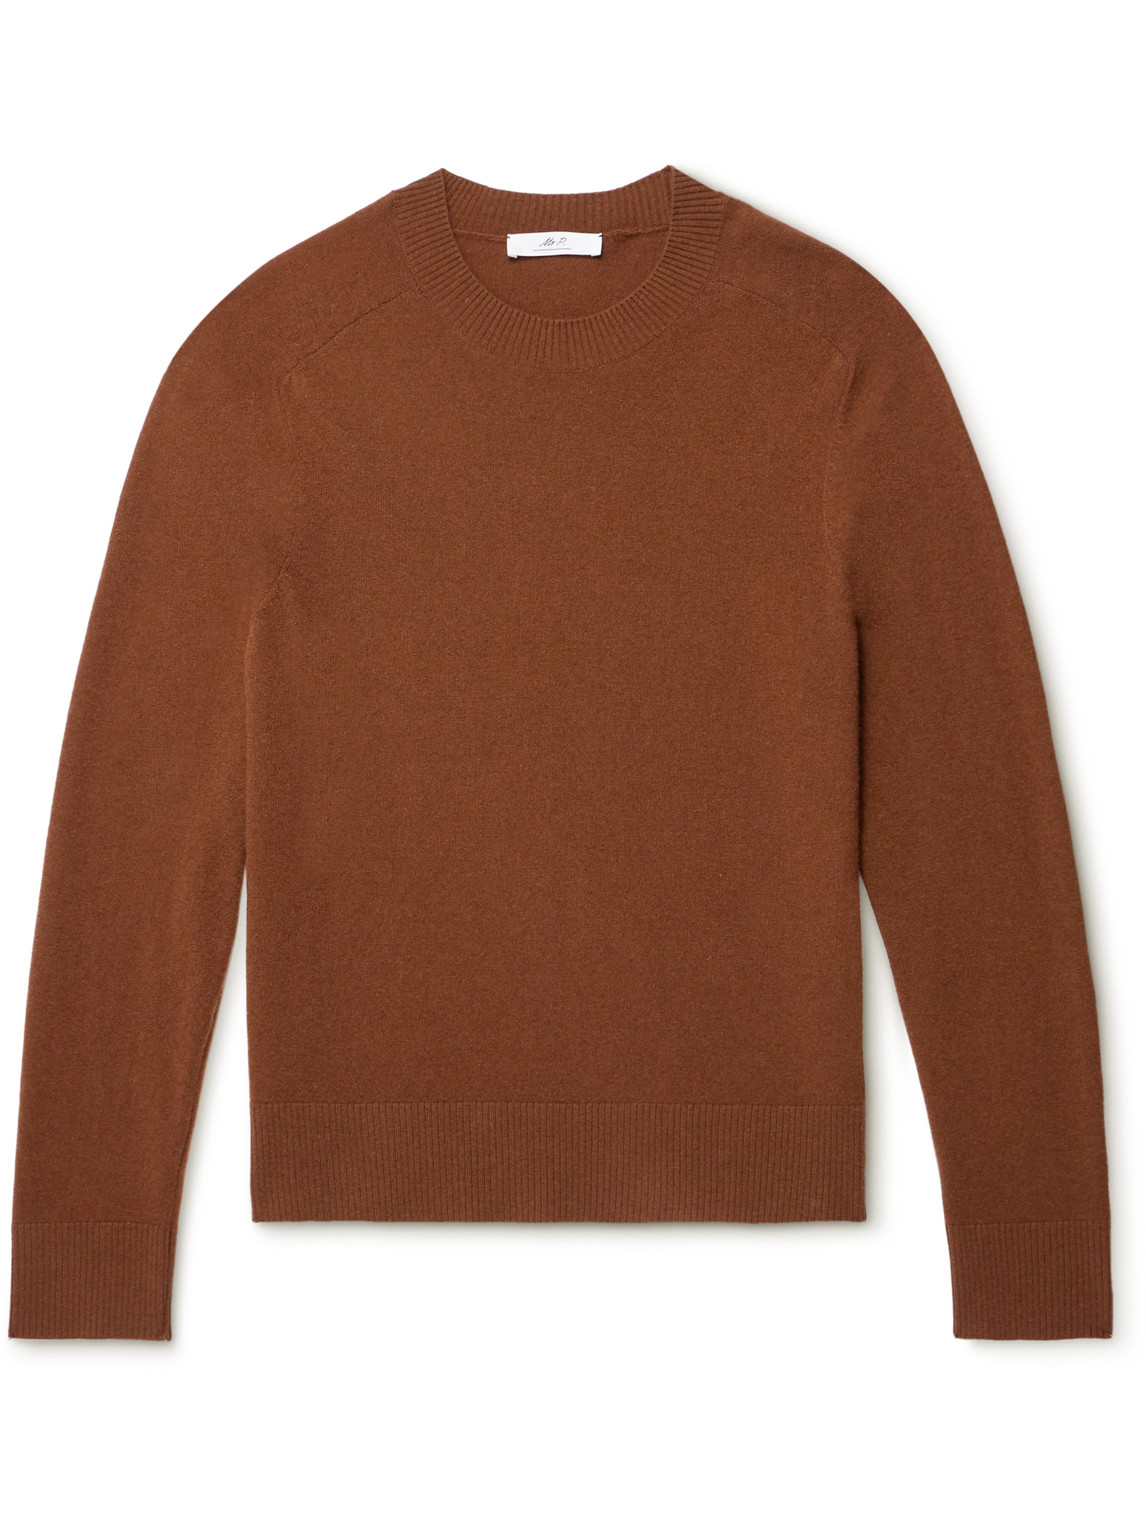 Mr P Wool Sweater In Brown